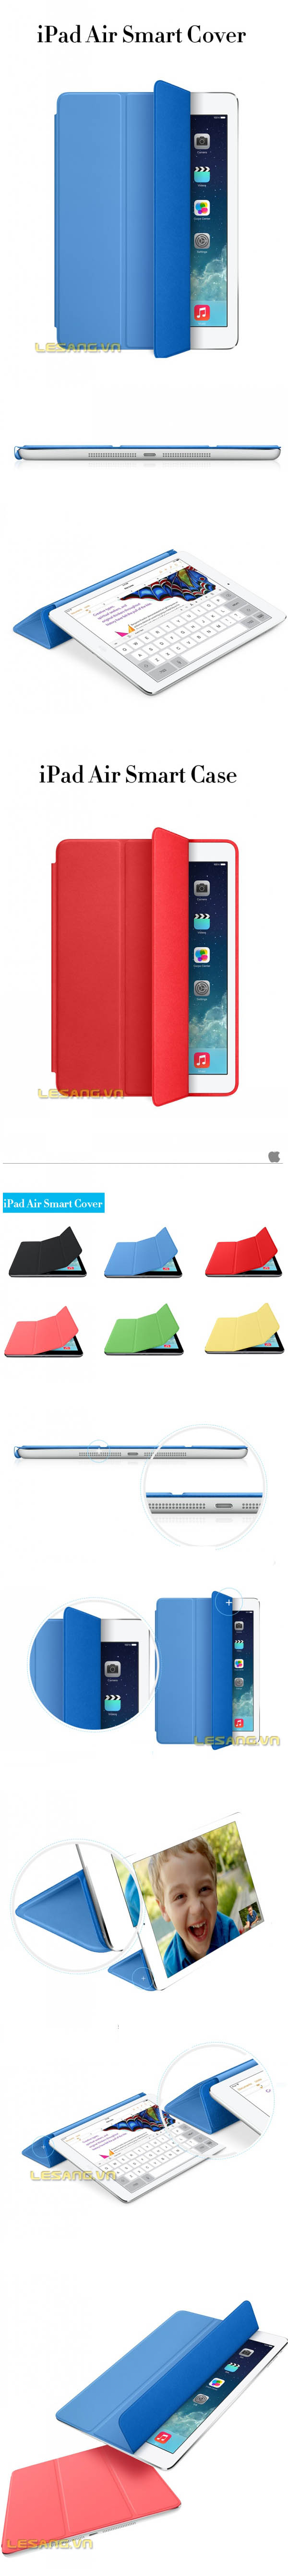 smart cover ipad air của apple